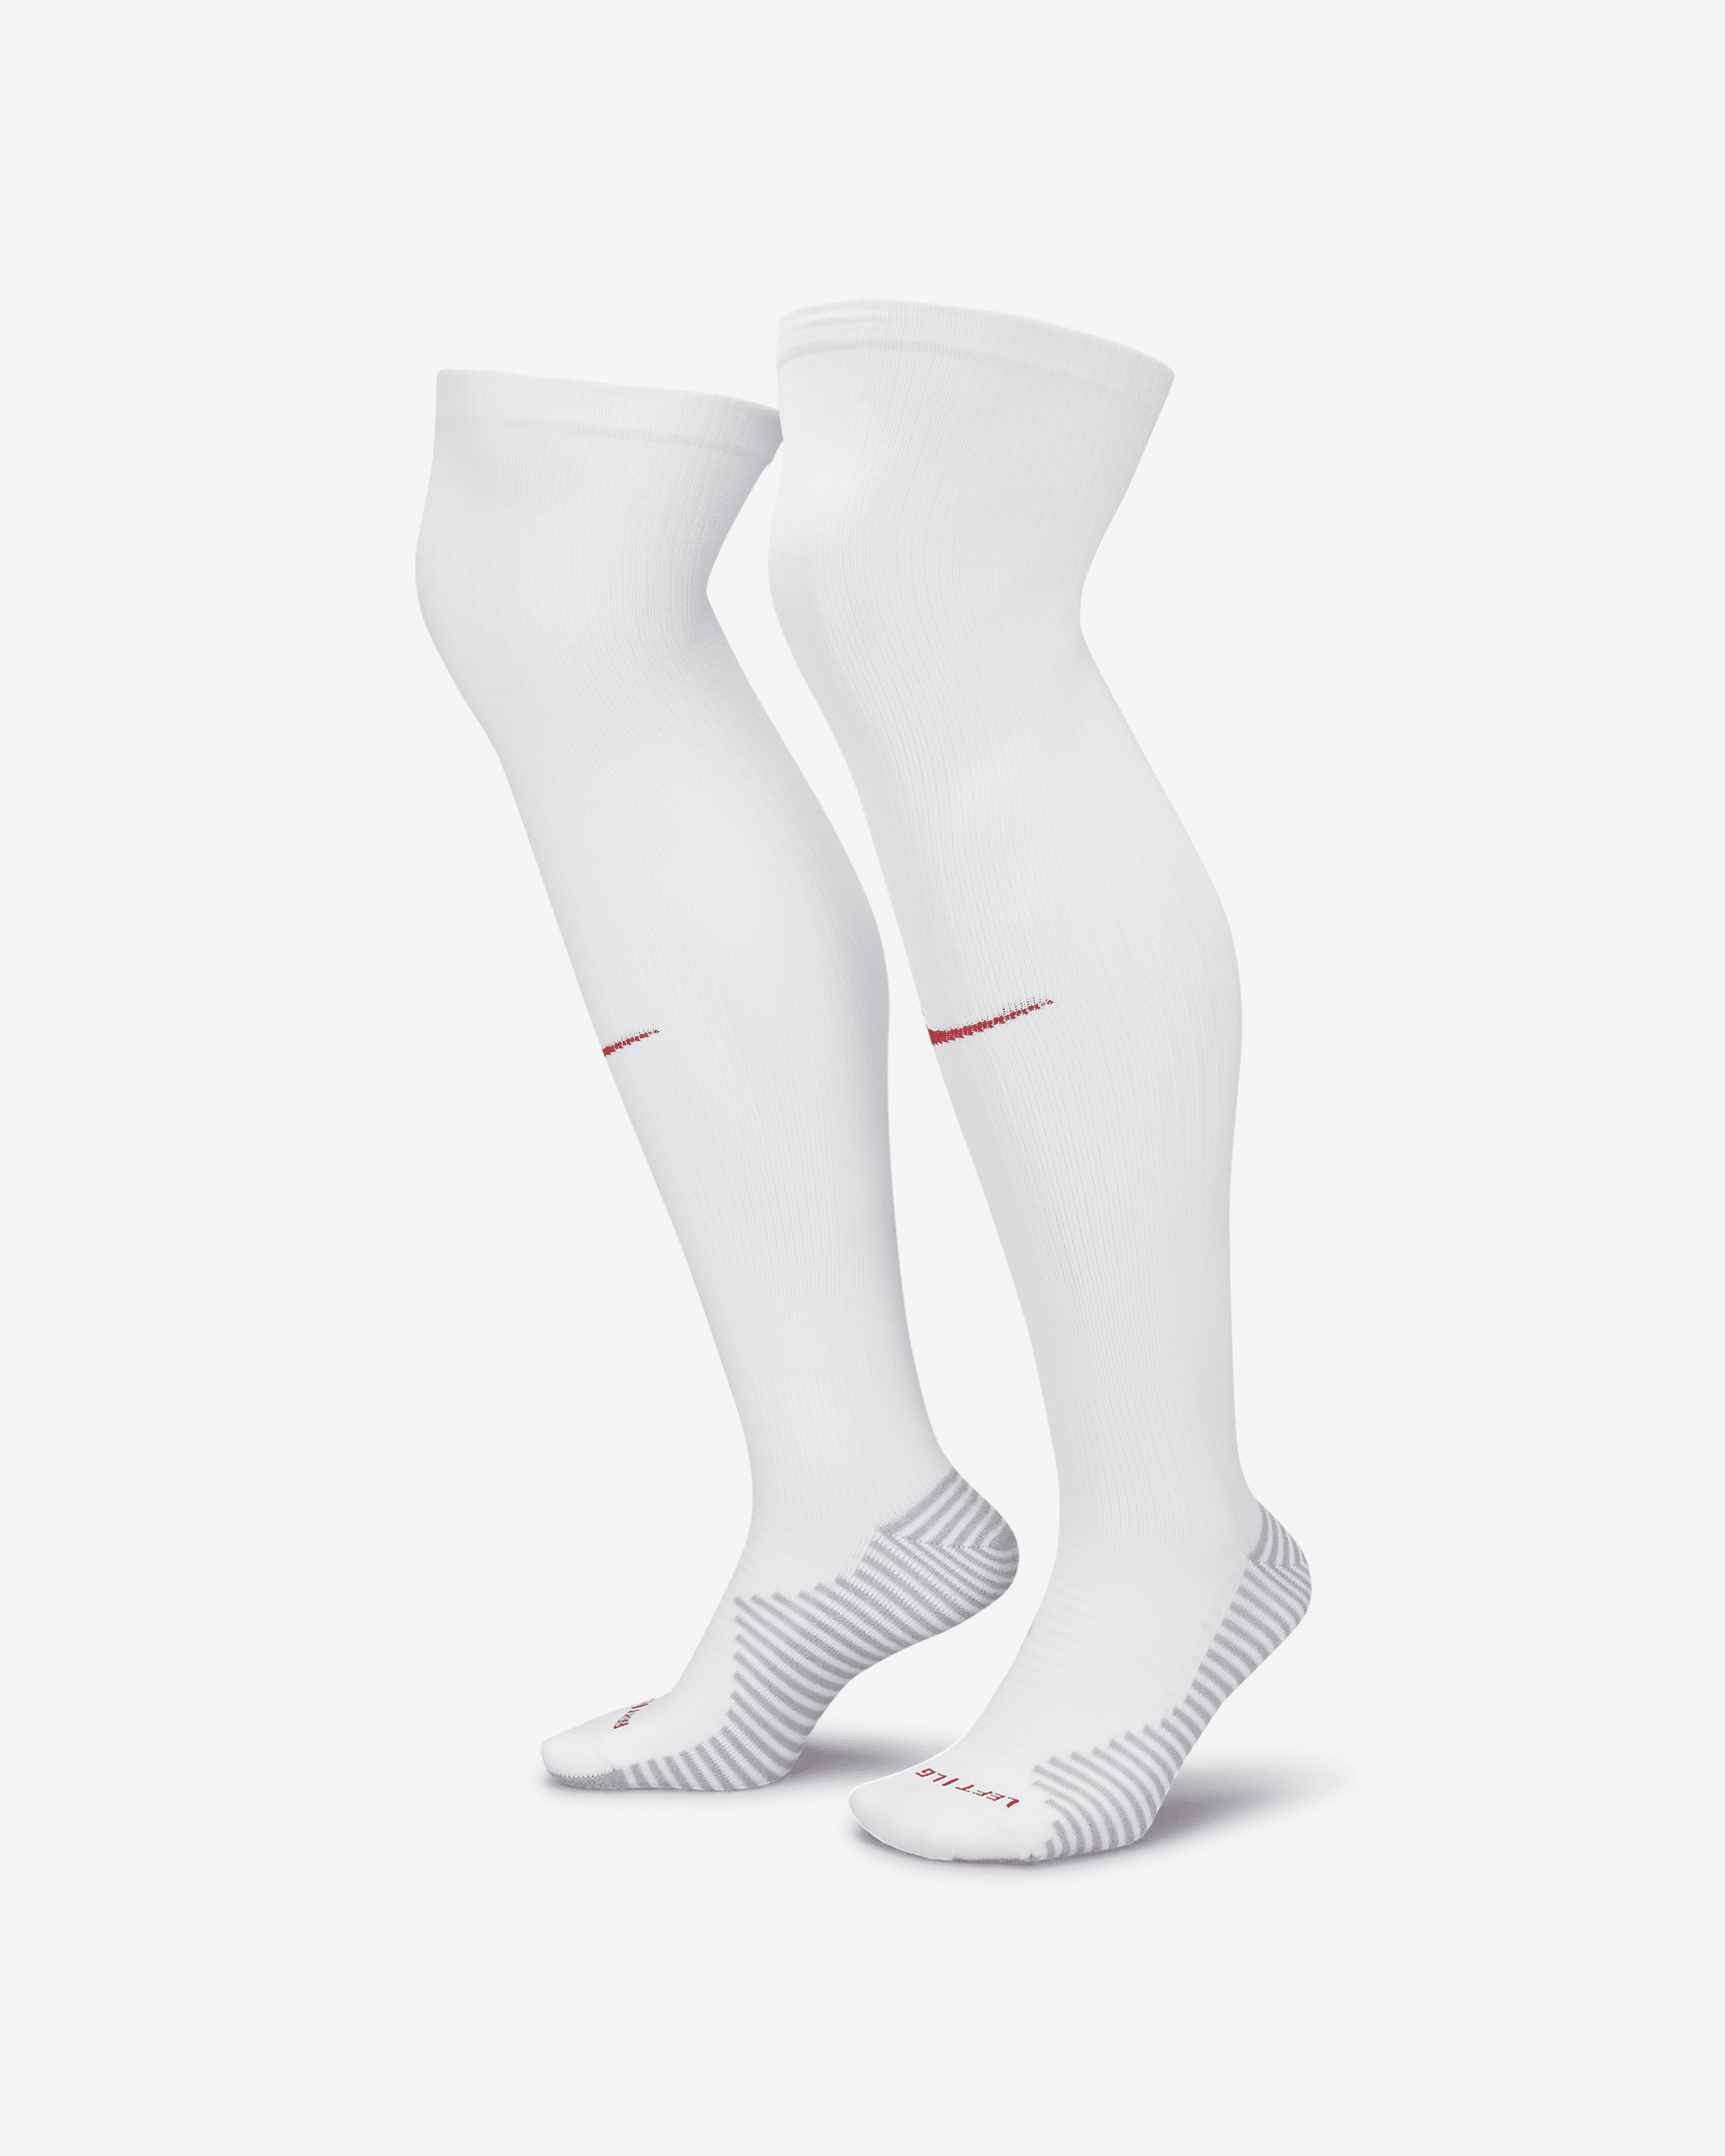 Poland Strike Home Knee-High Football Socks. Nike BE